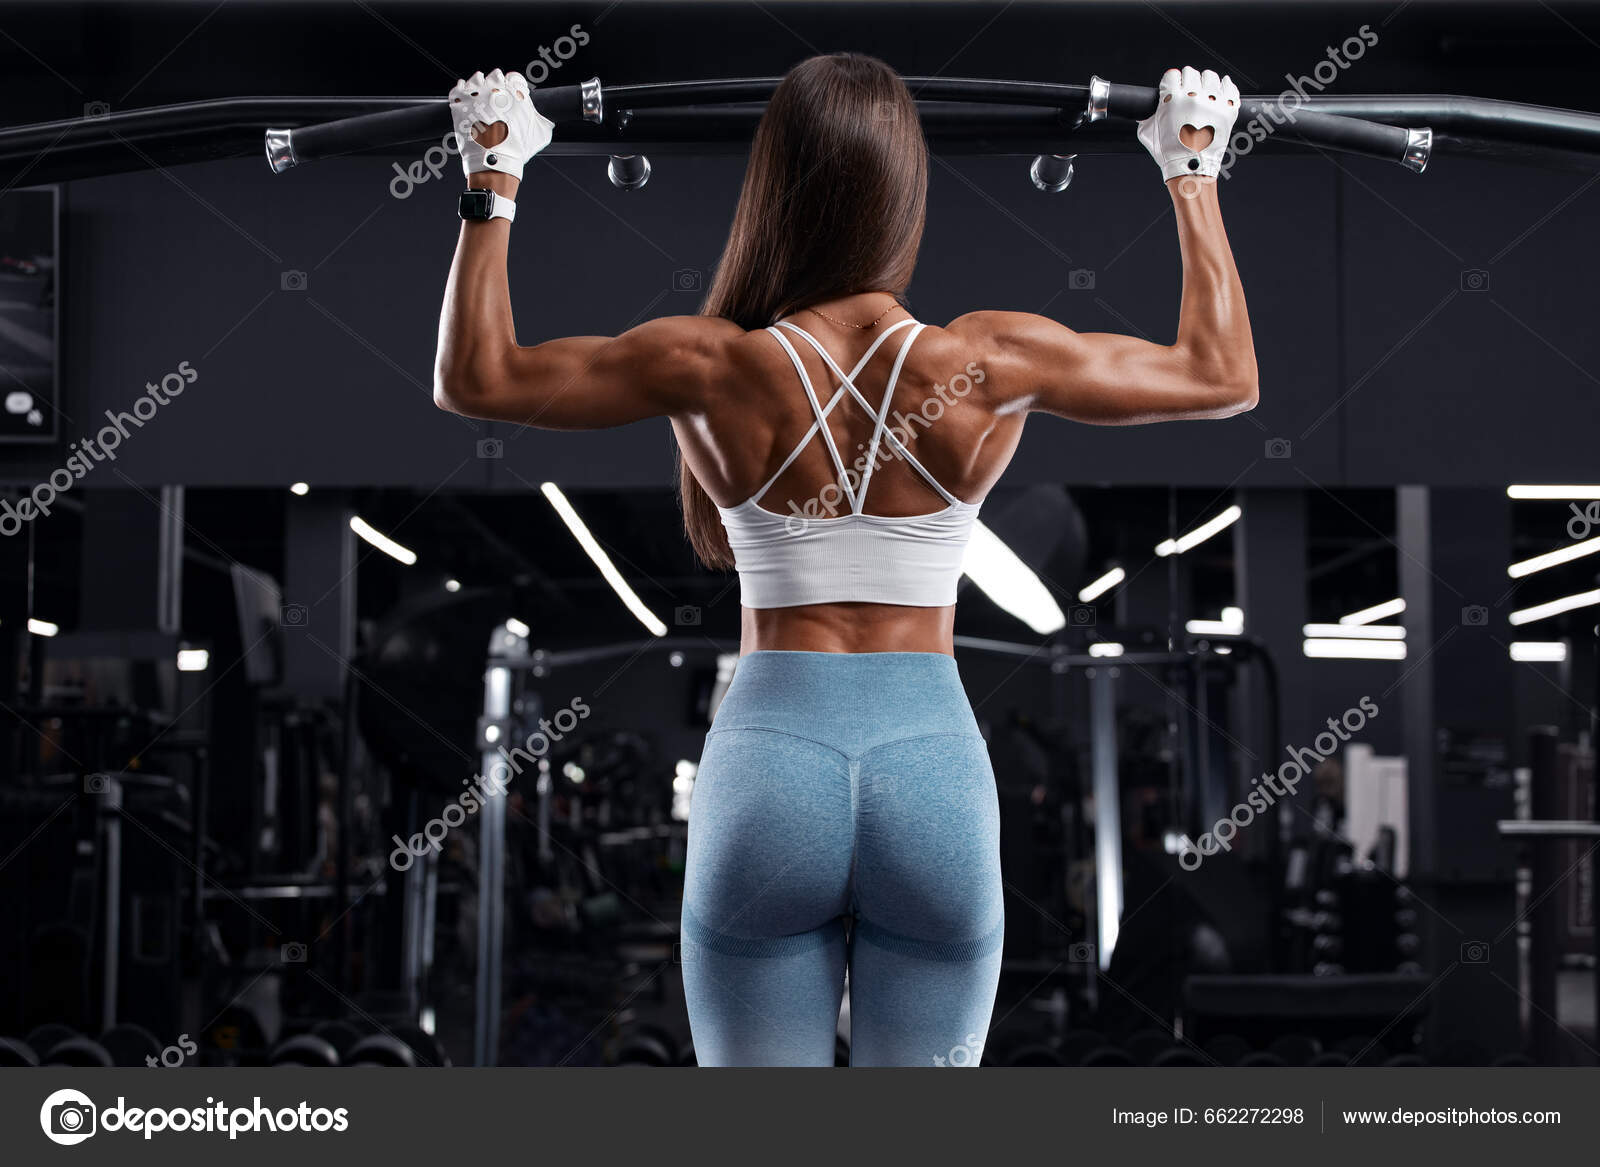 https://st5.depositphotos.com/3383955/66227/i/1600/depositphotos_662272298-stock-photo-fitness-woman-doing-pull-ups.jpg